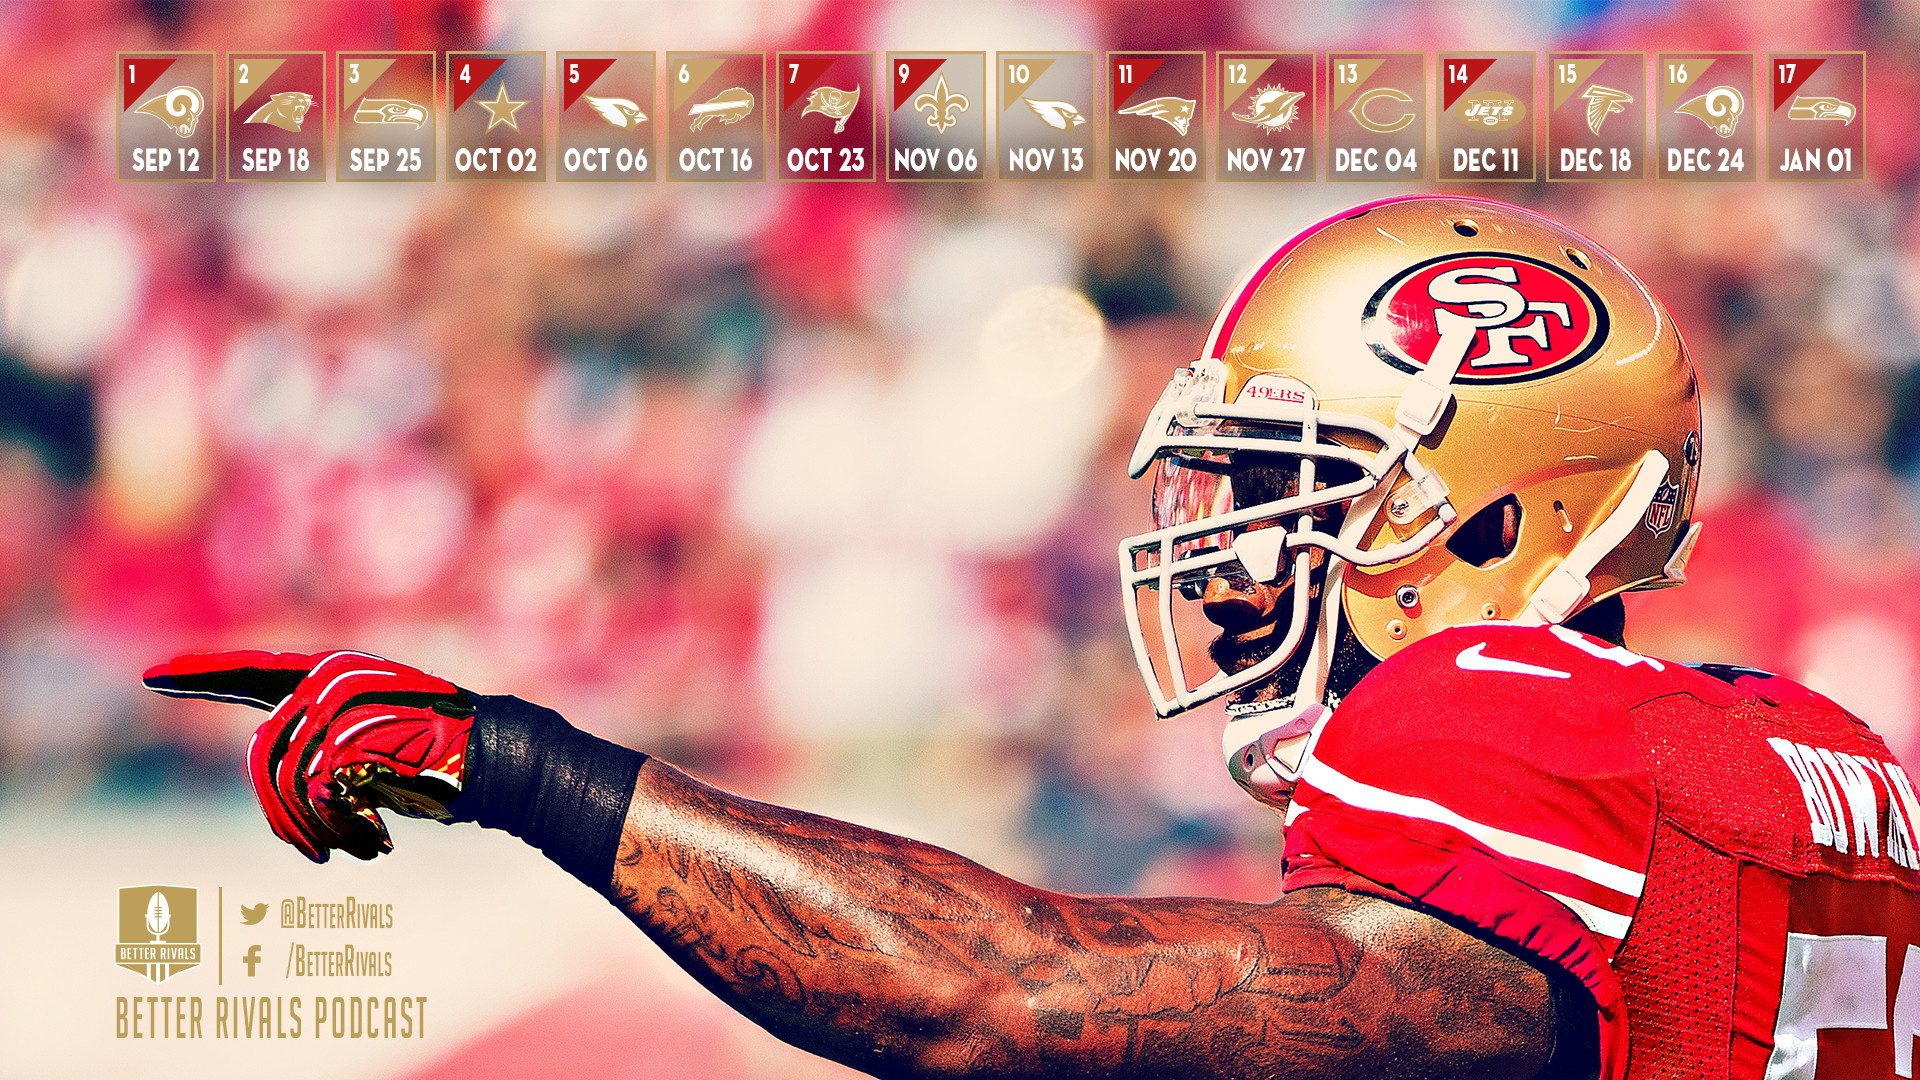 49ers Desktop Wallpaper Image